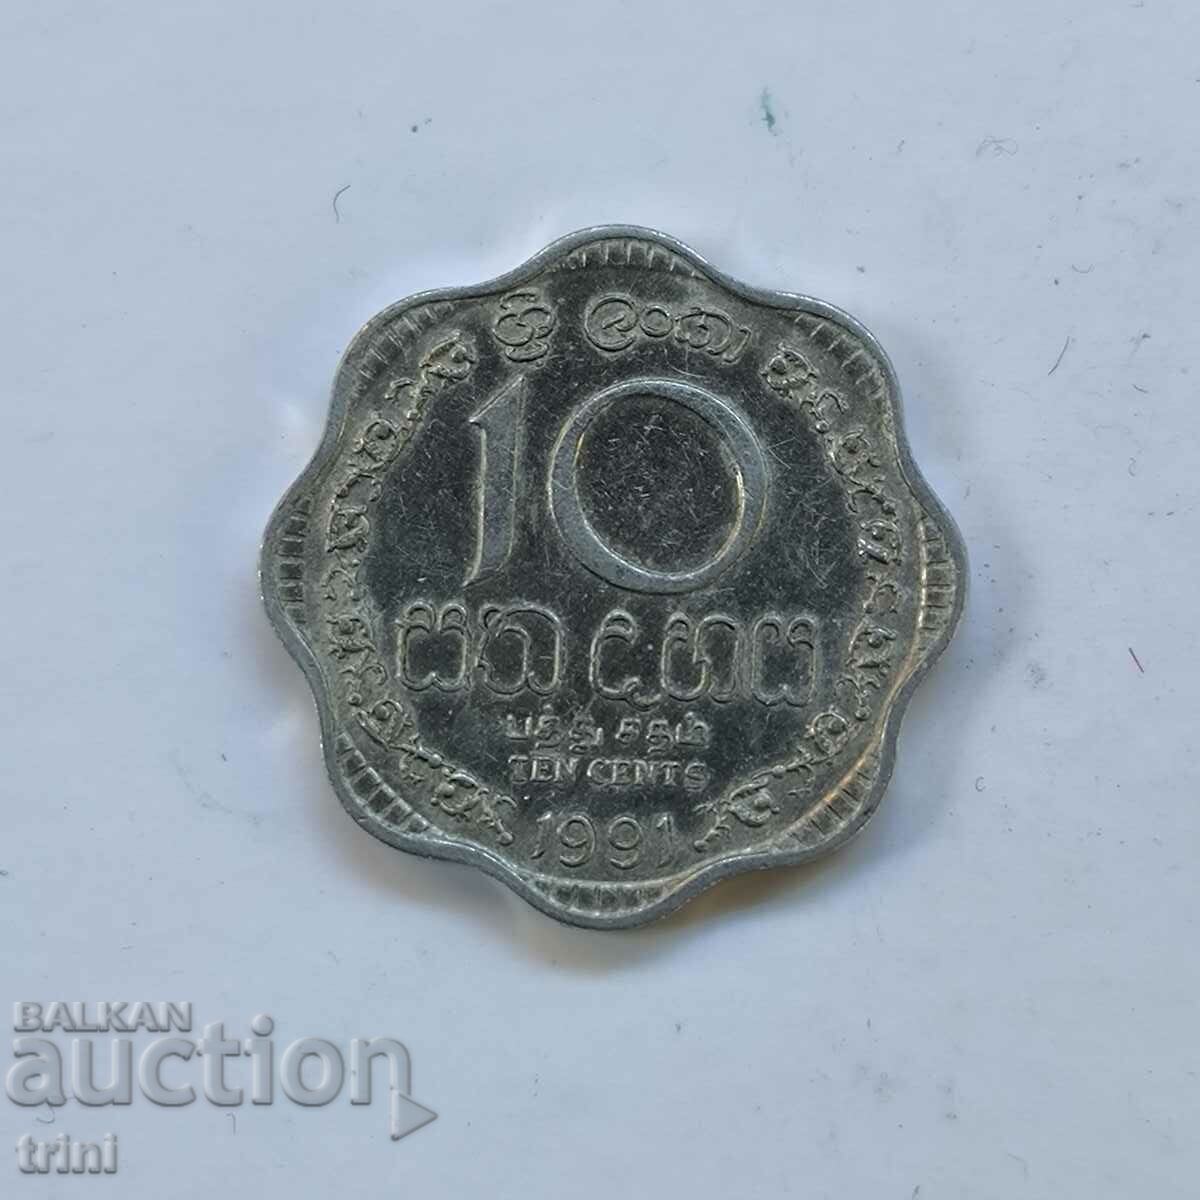 Sri Lanka 10 cents 1991